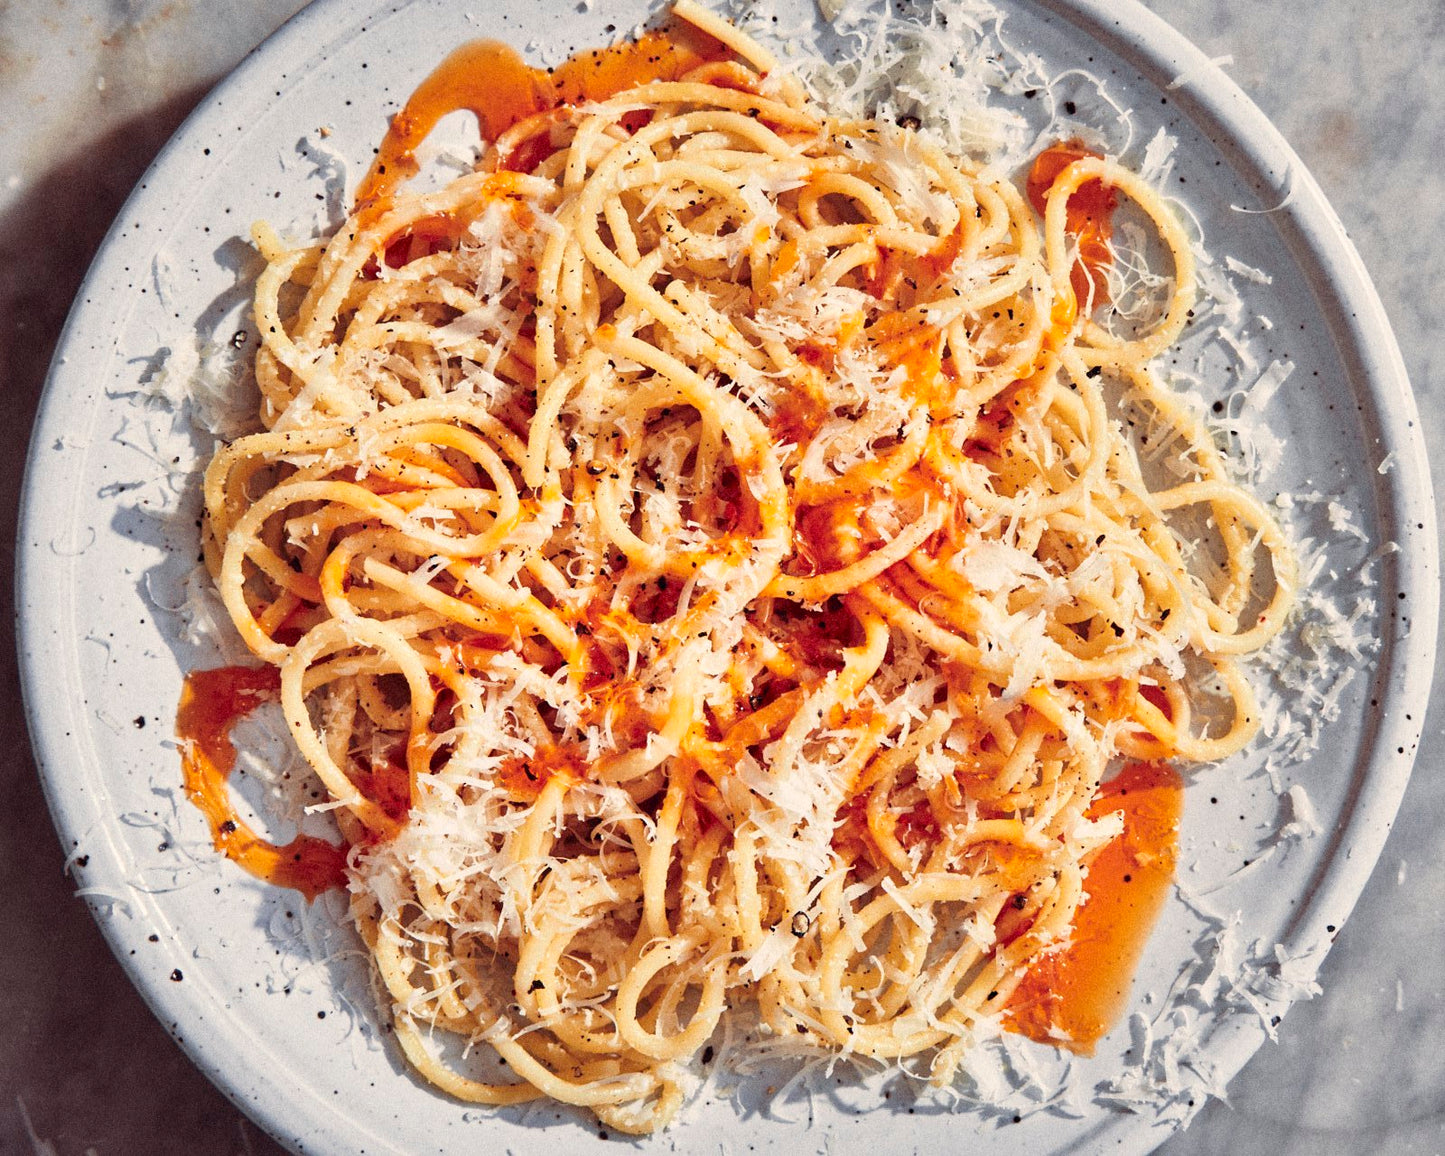 x Like Family: Spicy Spaghetti Carbonara